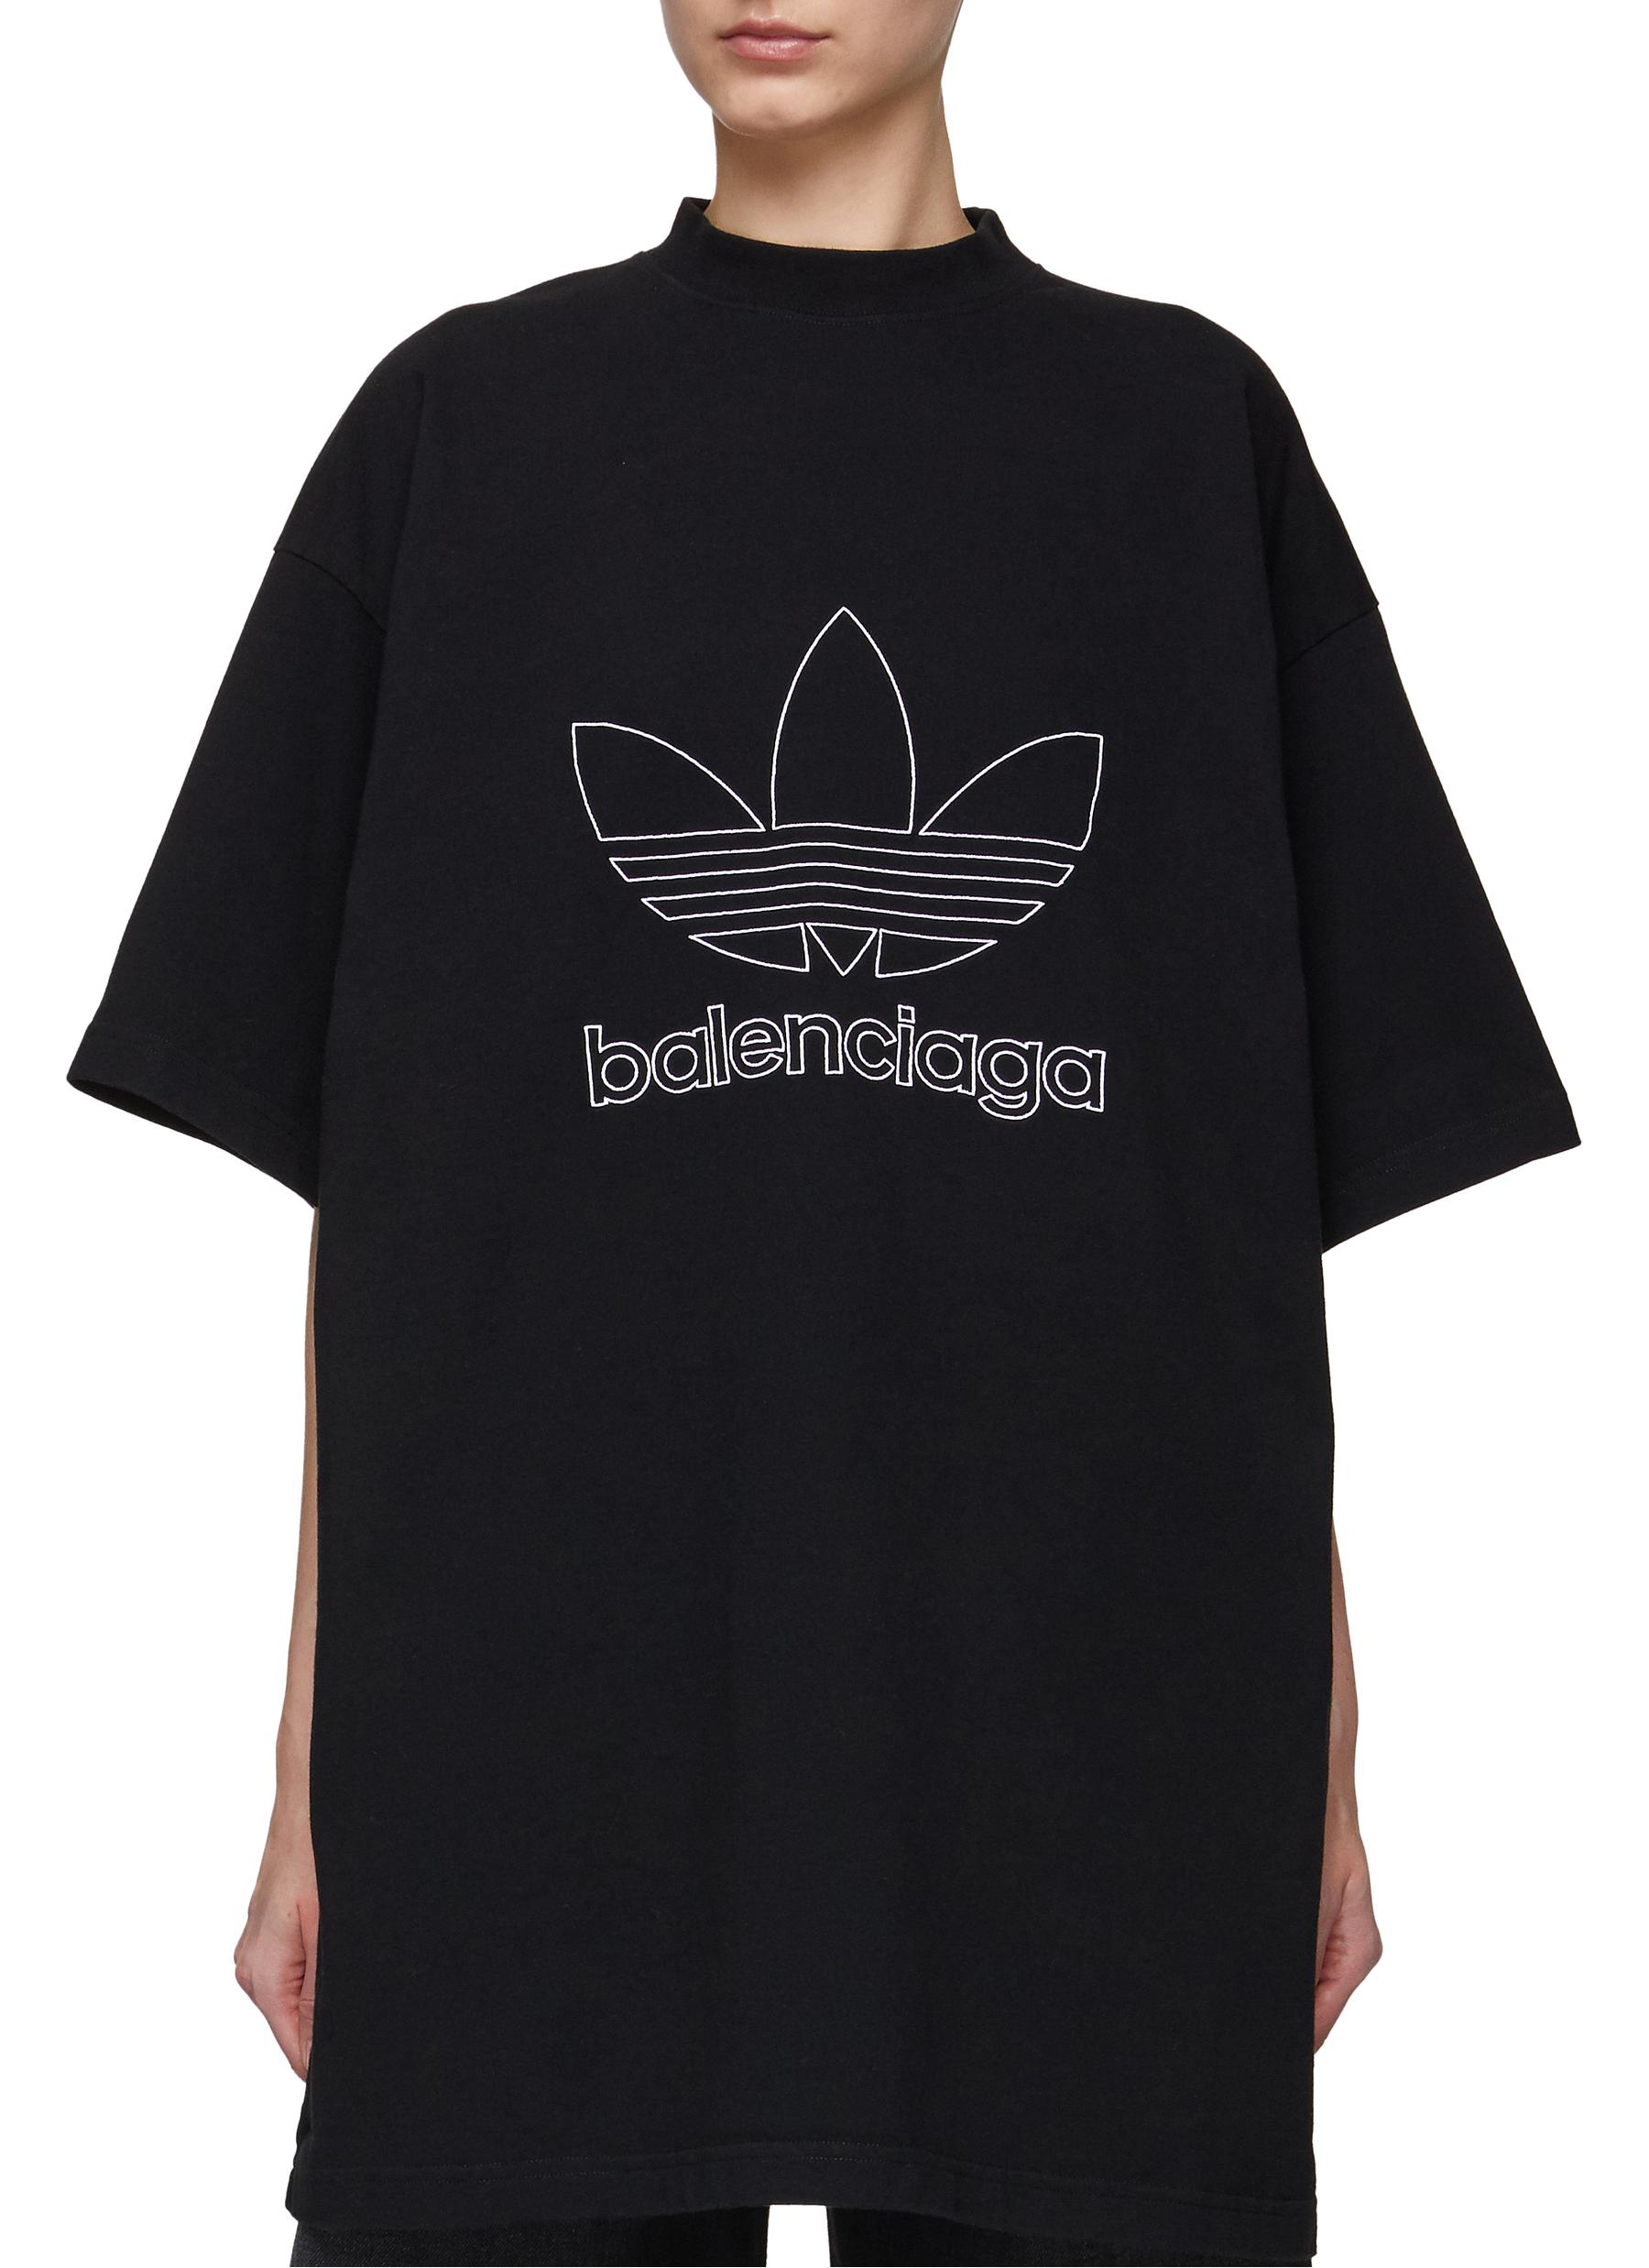 Balenciaga x Adidas Oversized T-Shirt